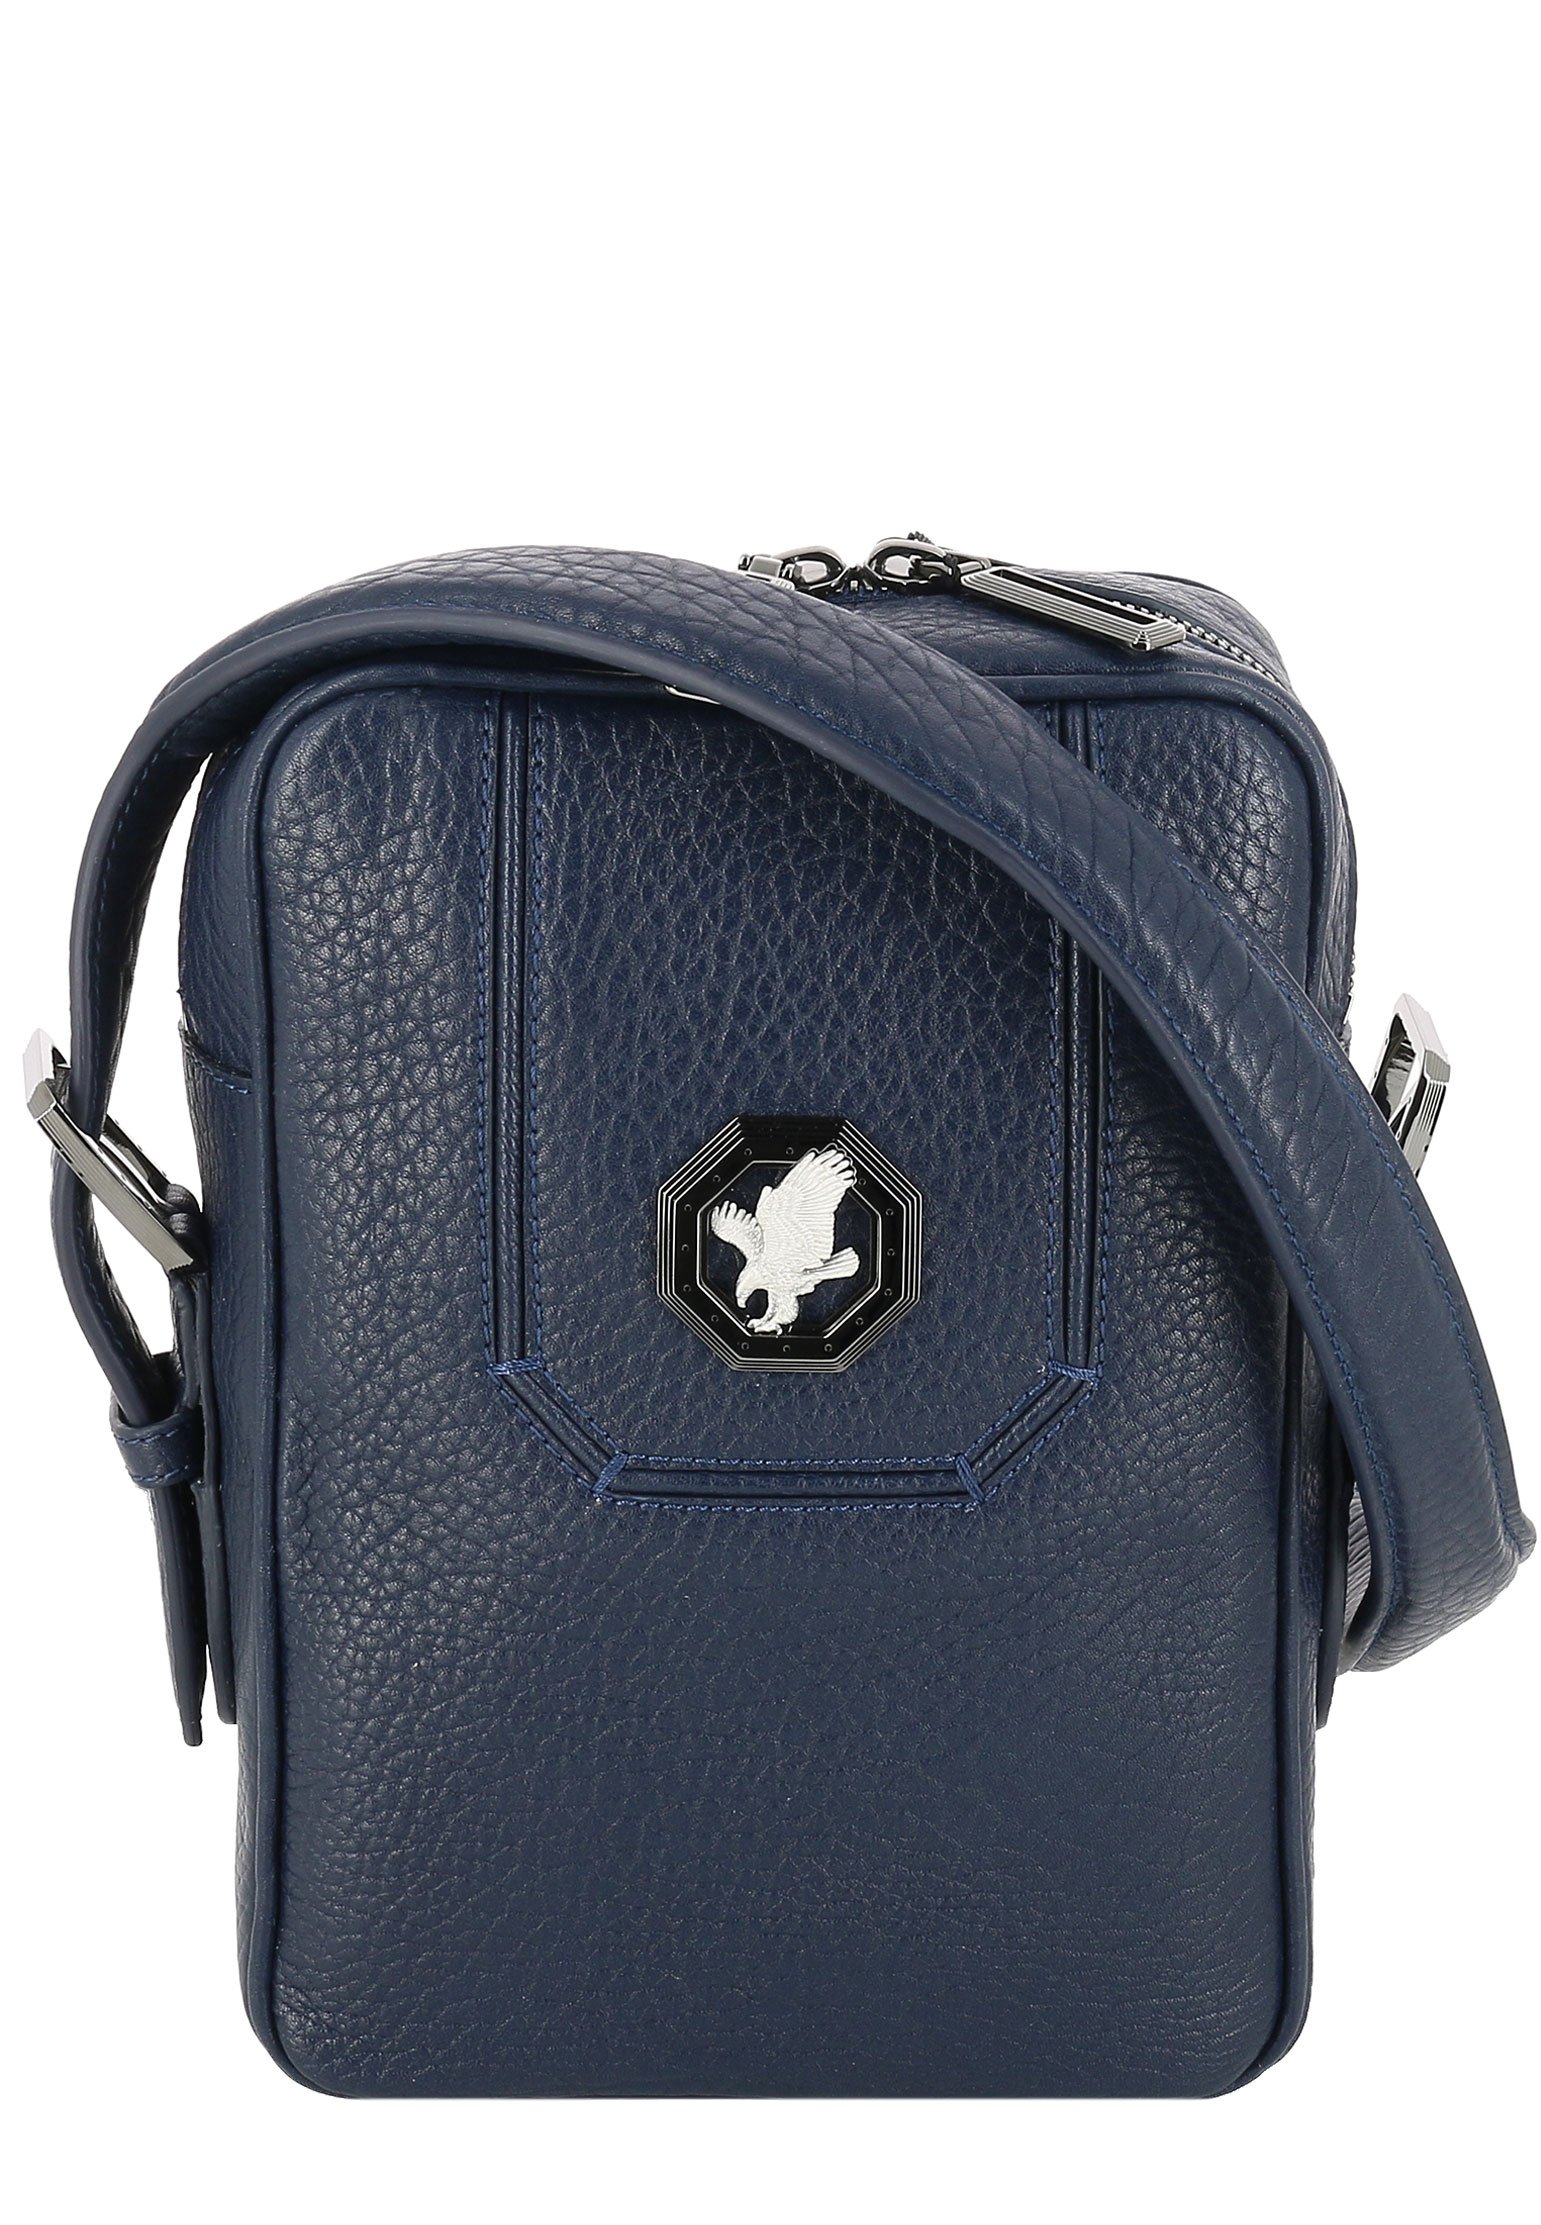 Messenger bag STEFANO RICCI Color: blue (Code: 290) in online store Allure